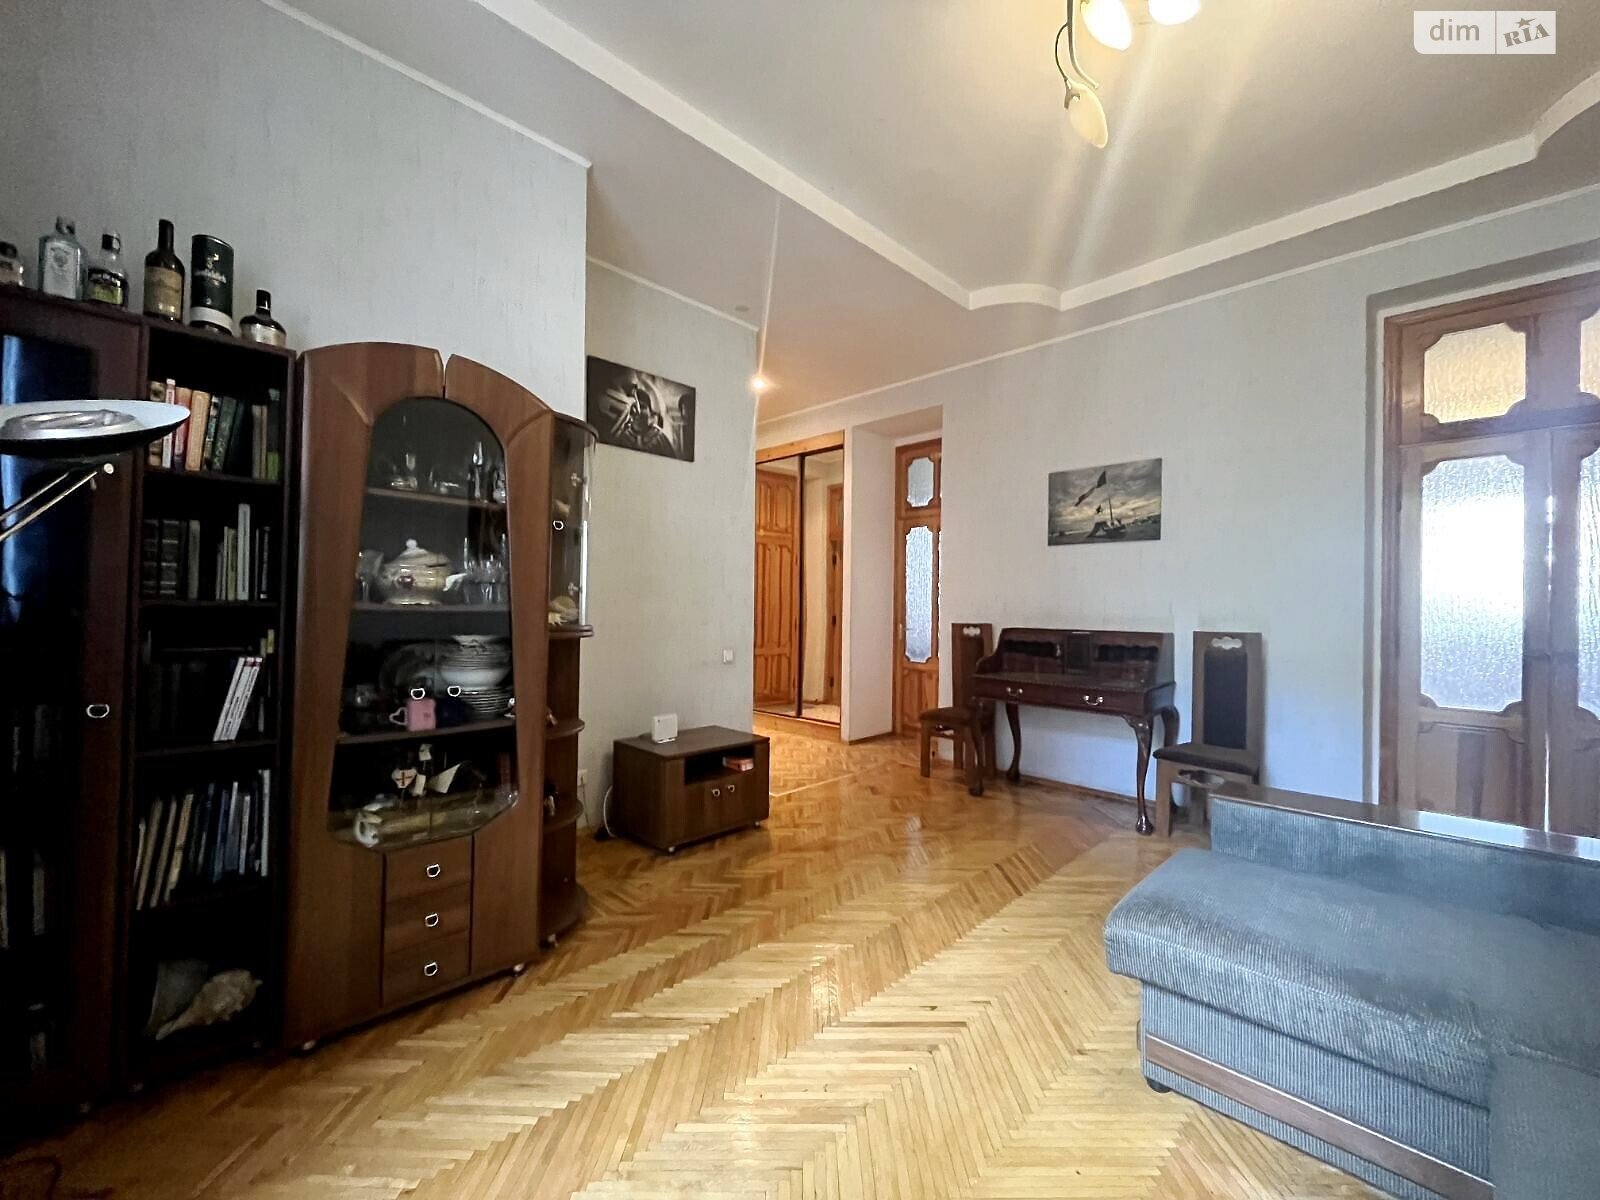 Продажа трехкомнатной квартиры в Харькове, на ул. Труфанова 14, район Центр фото 1